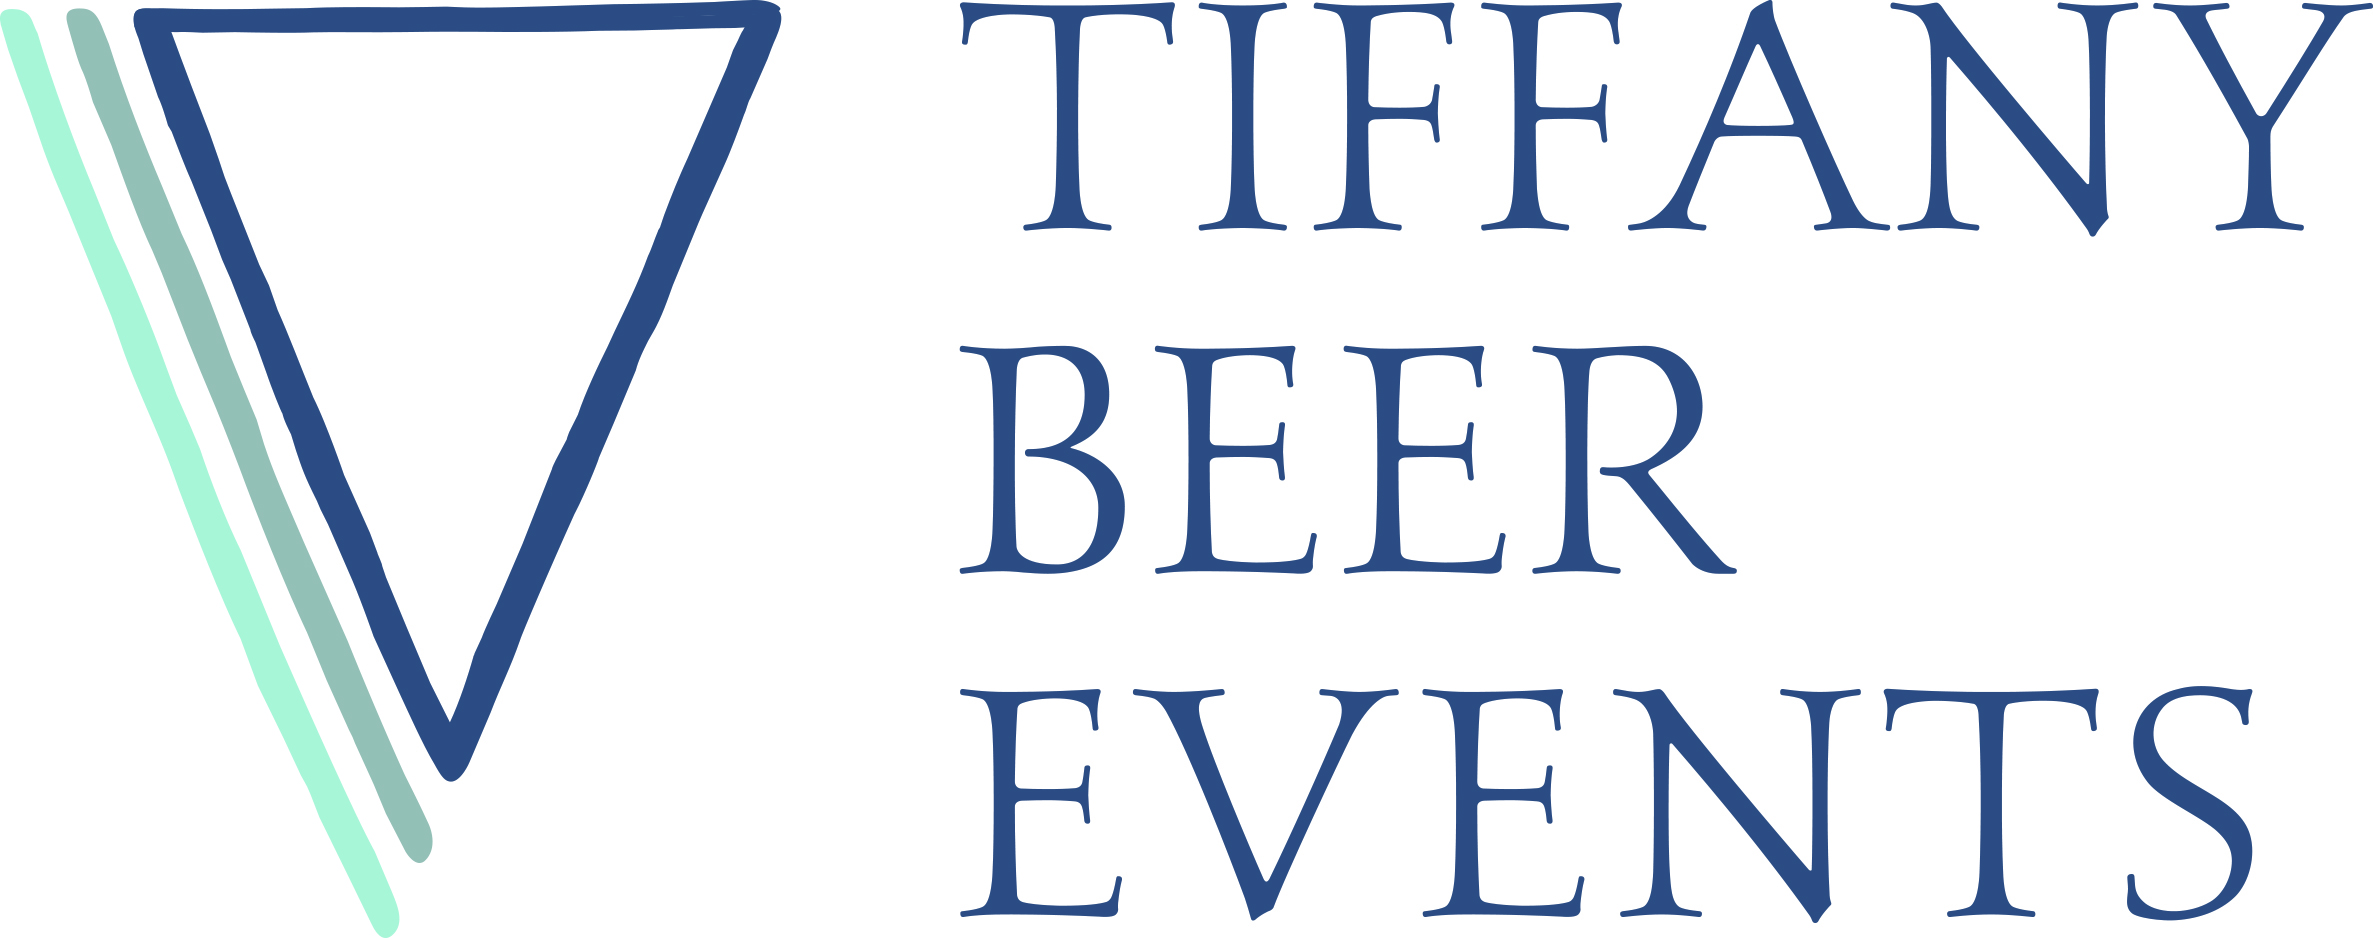 Tiffany Beer Events